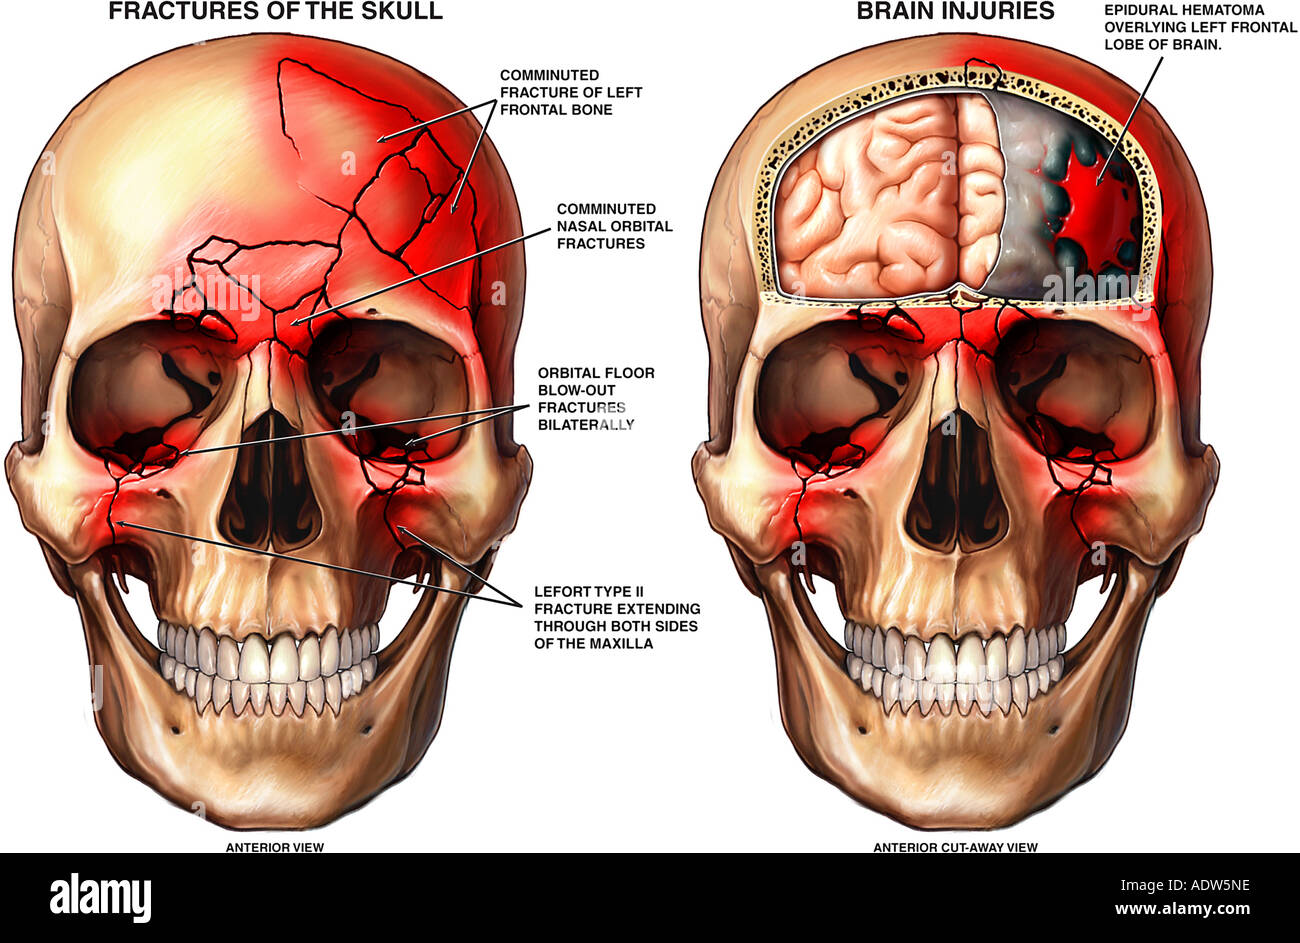 Head Injury Skull Fractures and Hematoma on the Brain Stock Photo